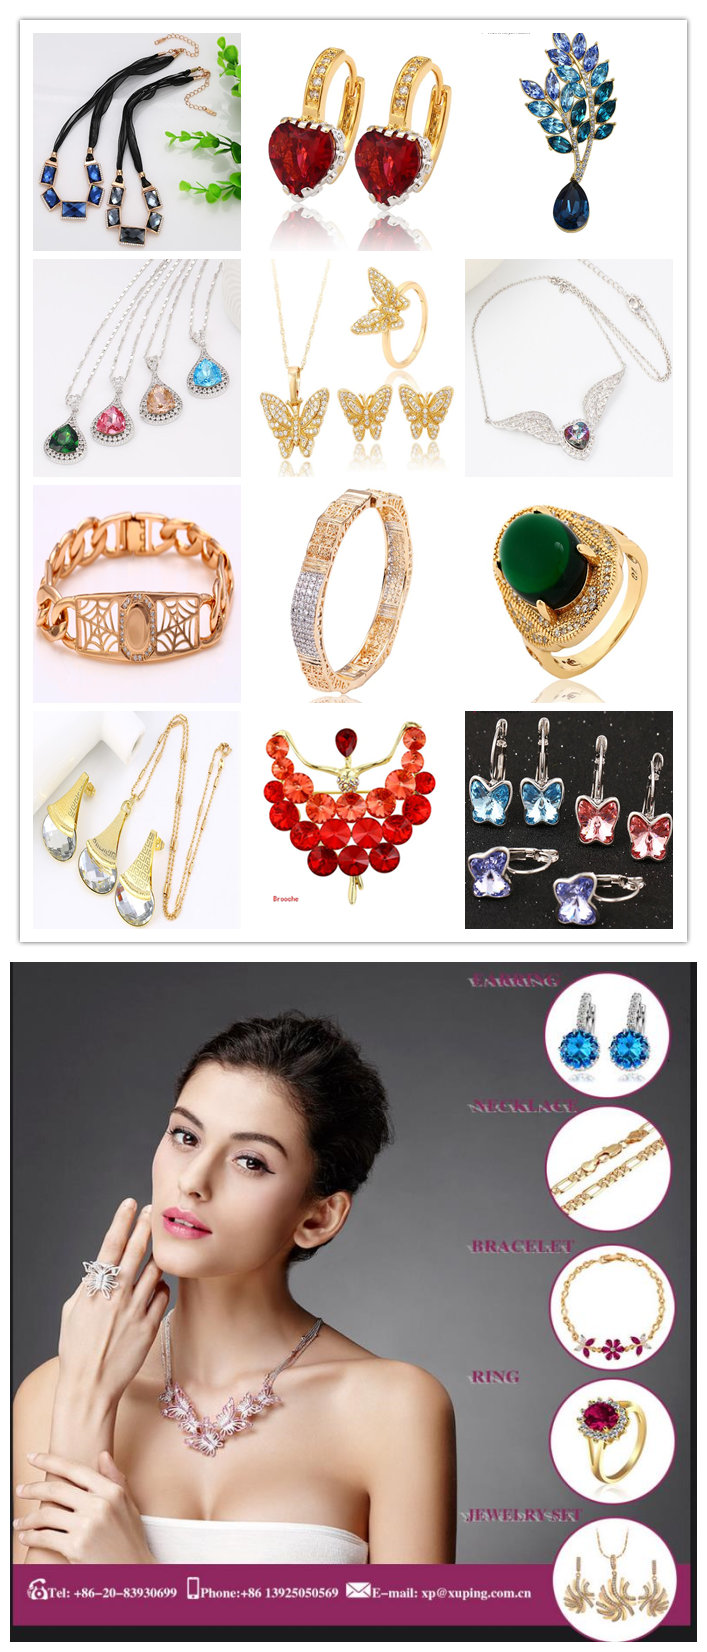 91702 Fashion Fancy CZ Diamond 18k Gold Color Imitation Jewelry Earring Drop